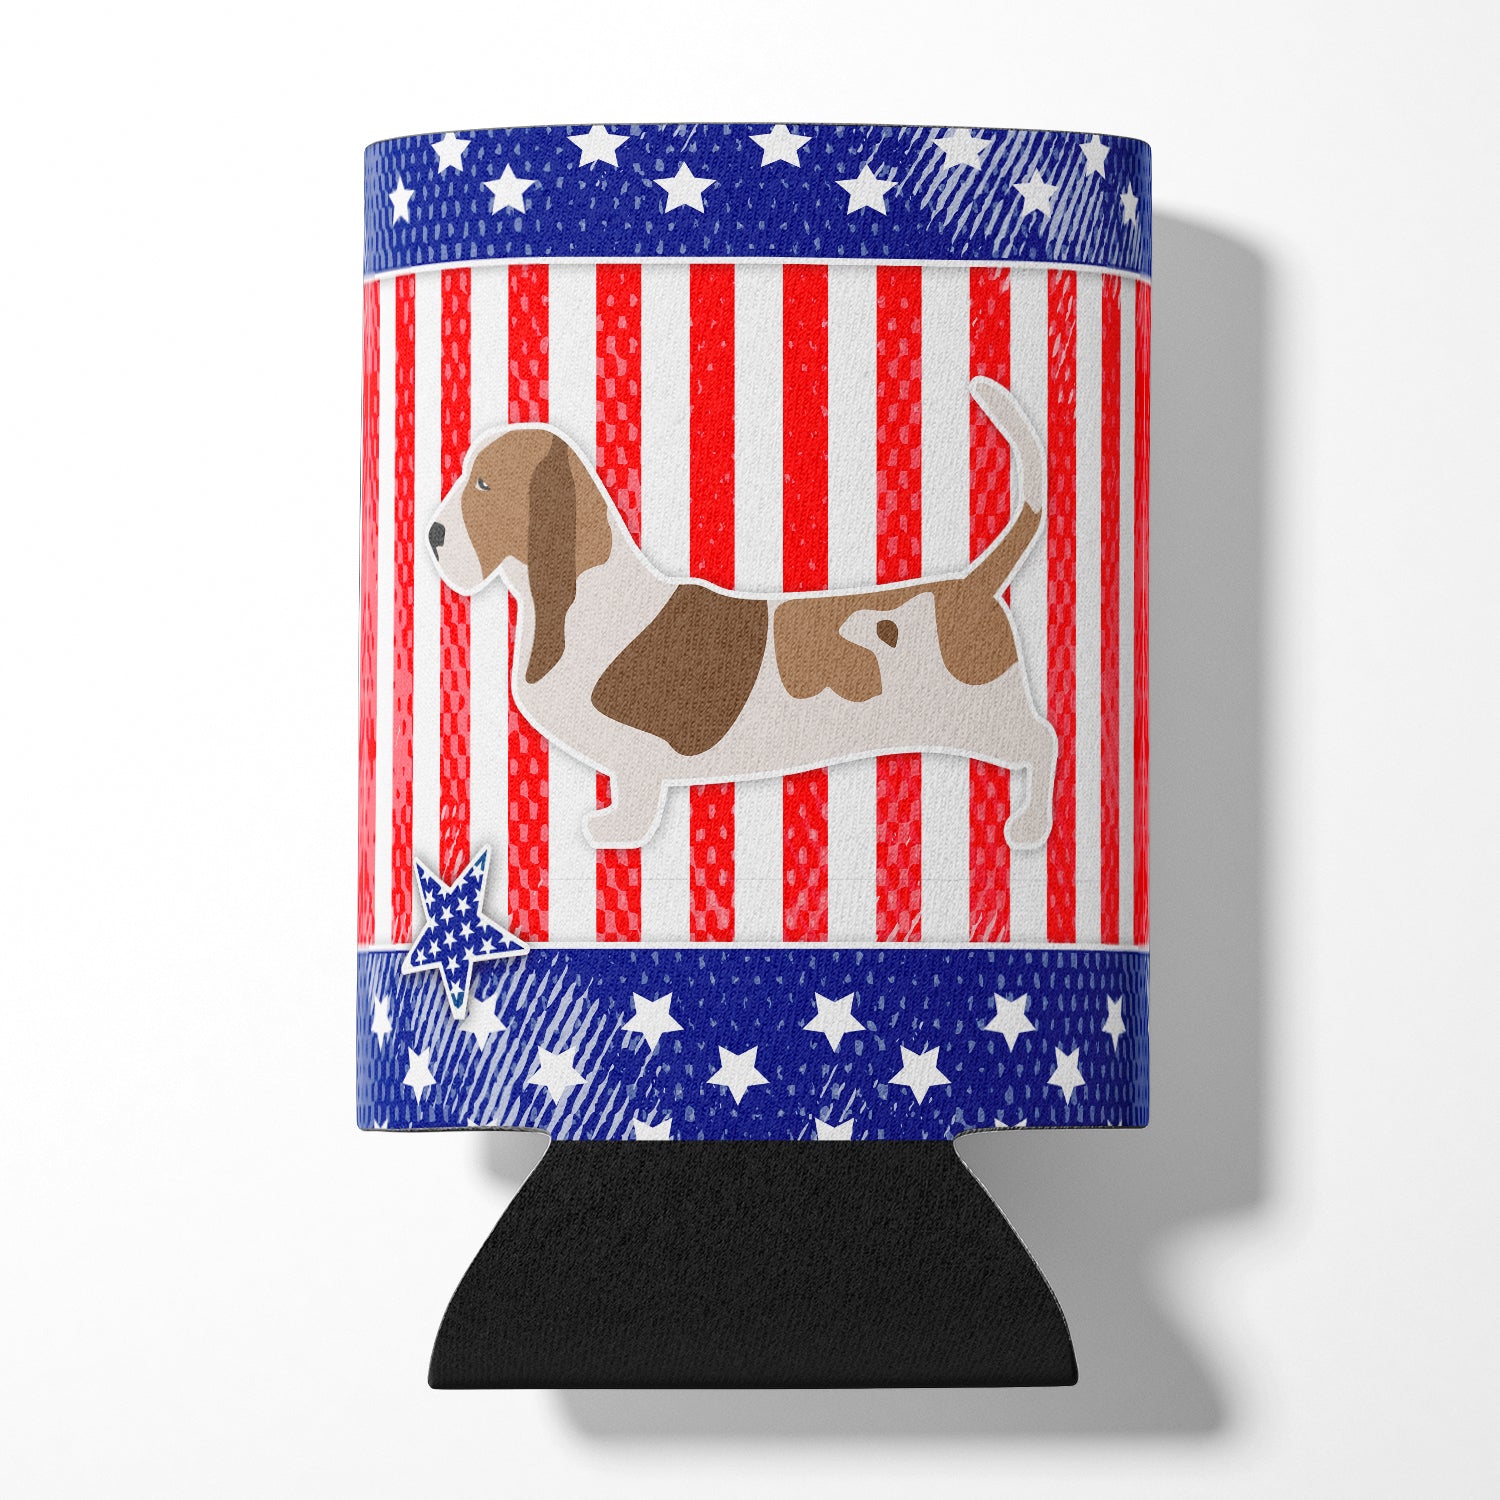 USA Patriotic Basset Hound Can ou Bottle Hugger BB3302CC